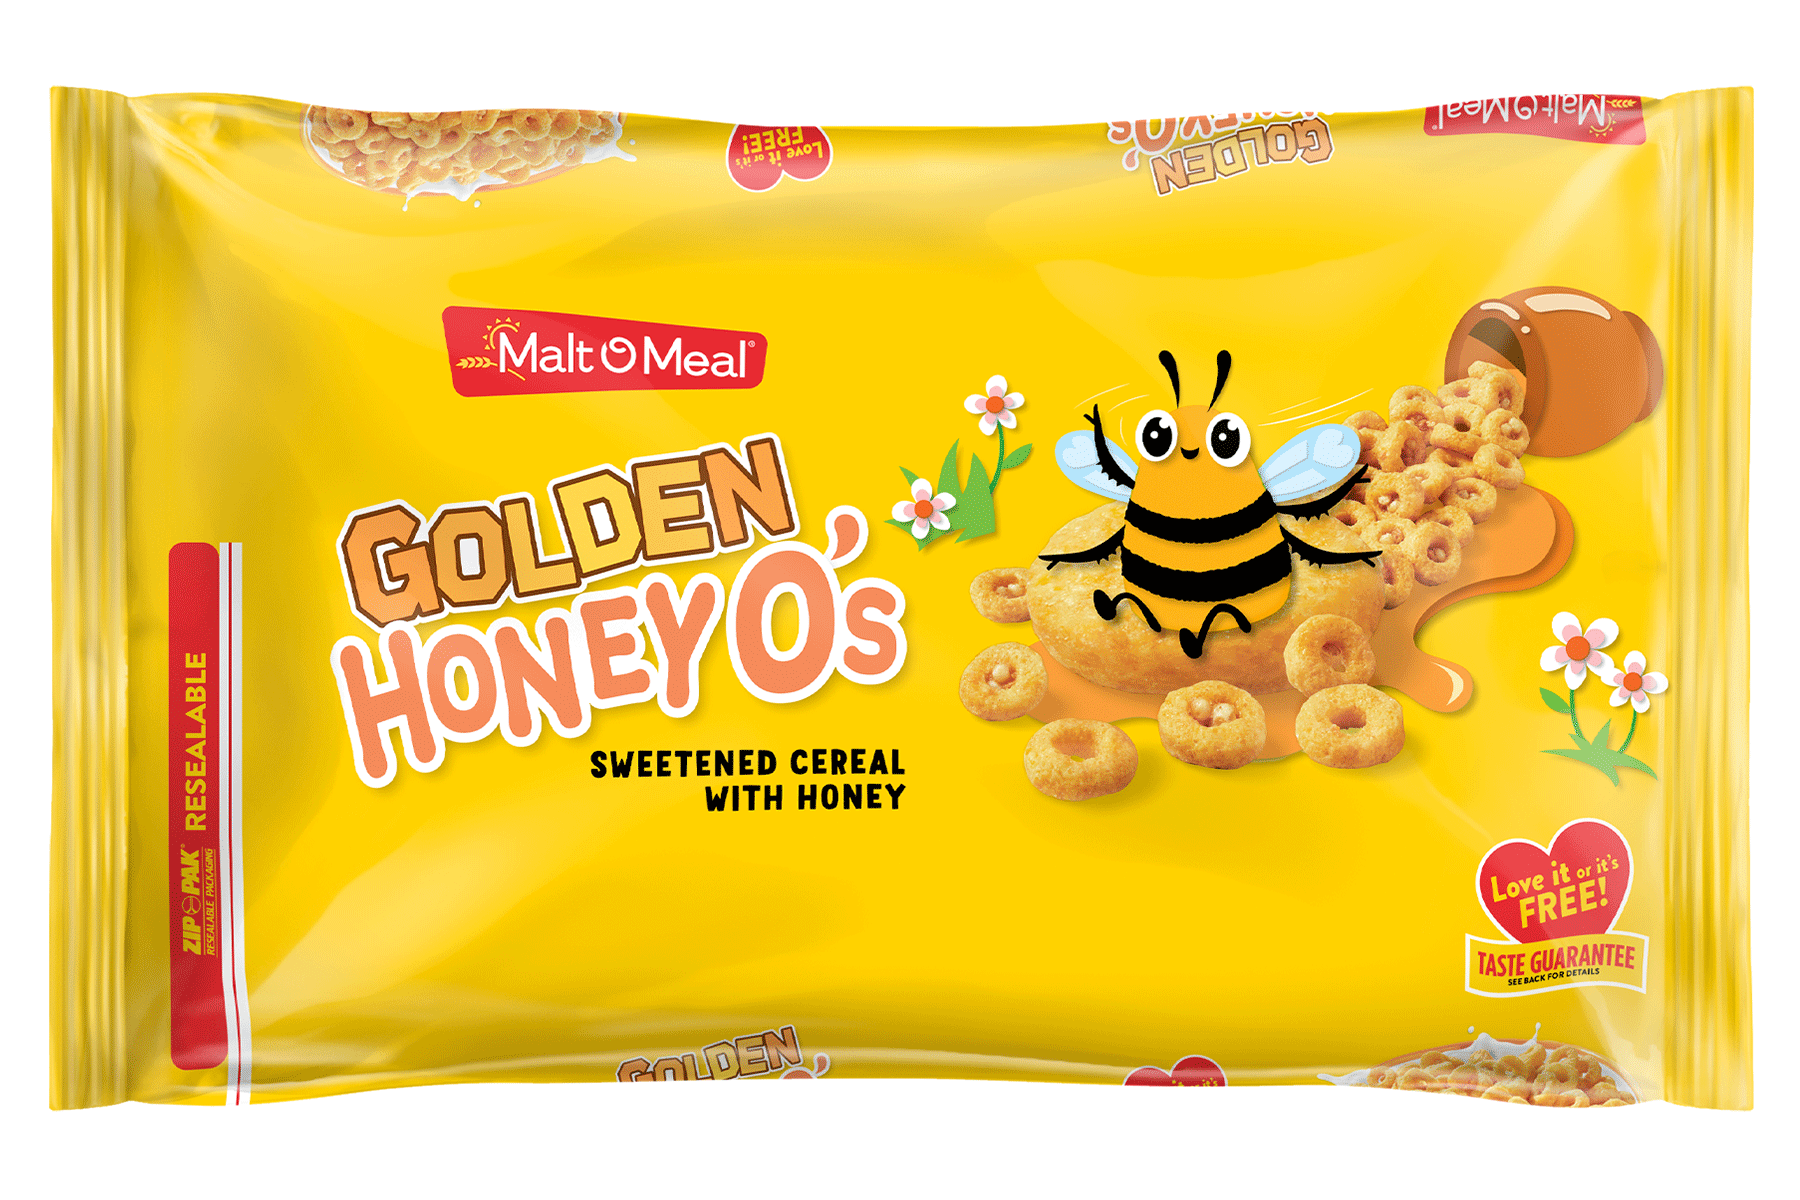 Golden-Honey-Os-cereal.png